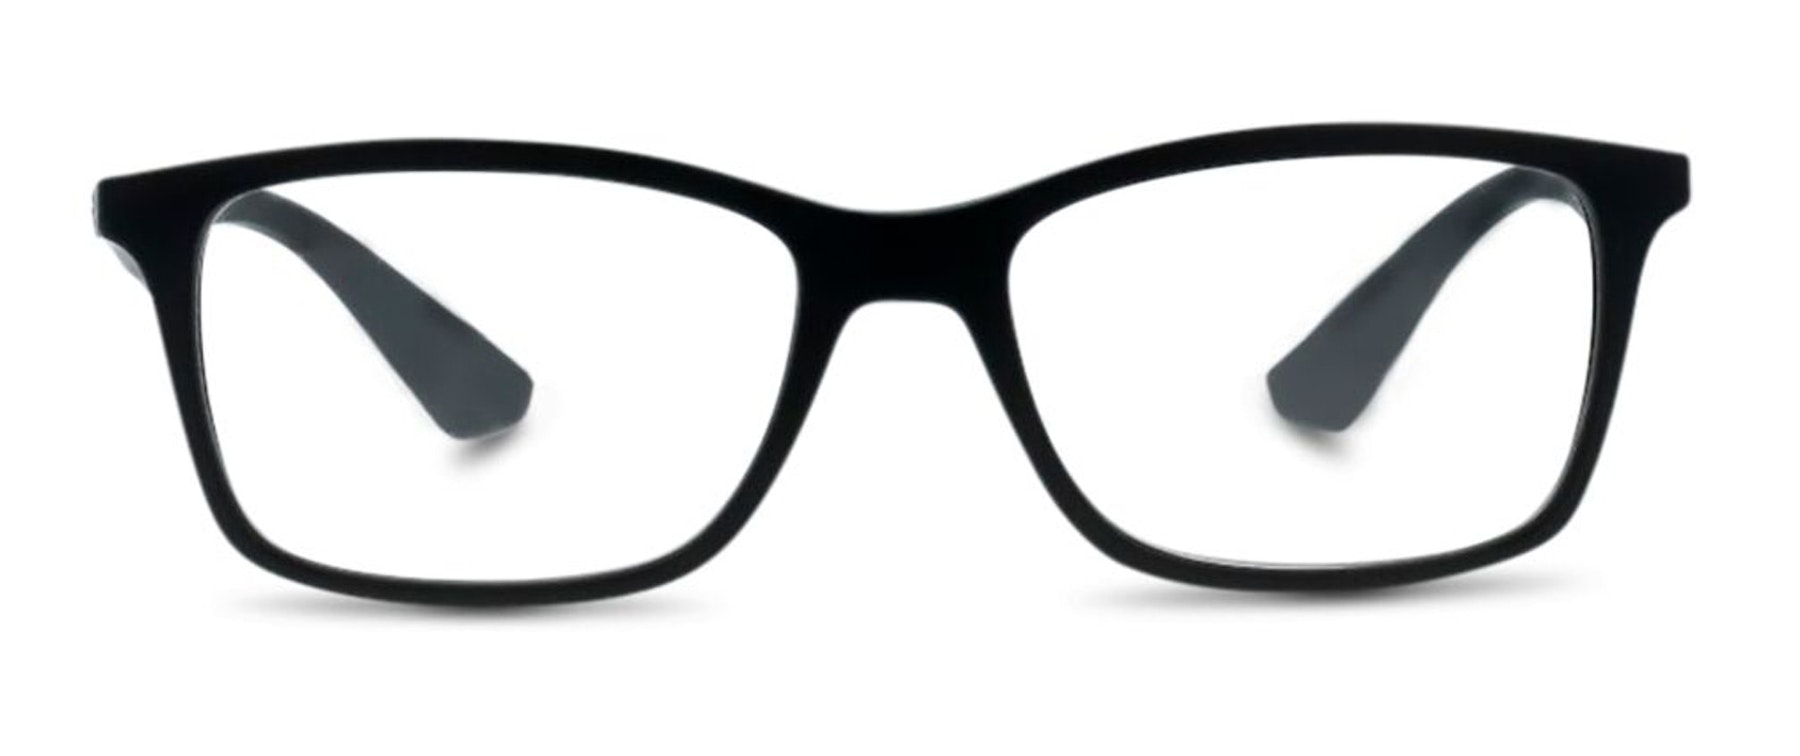 mens prescription glasses ray ban